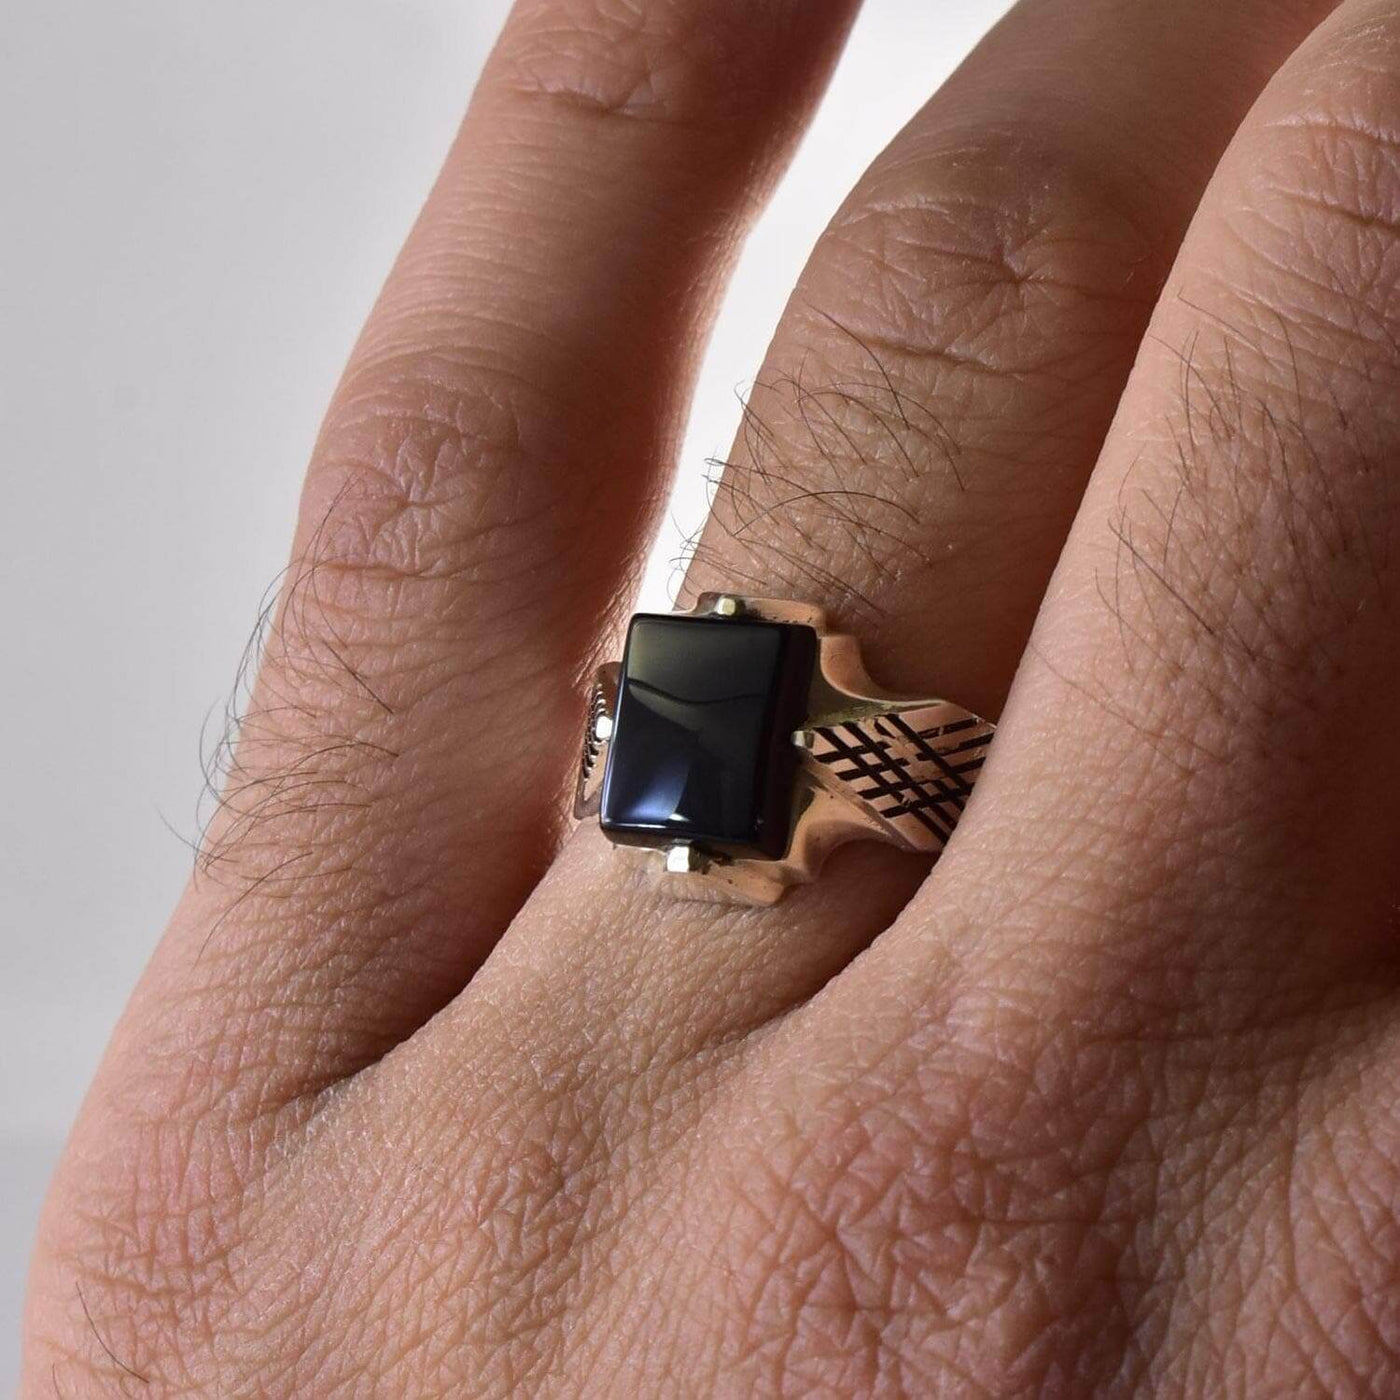 Black Aqeeq onyx aqeeq stone ring for men and women | Yemeni Aqeeq Ring Size 10 - Al Ali Gems